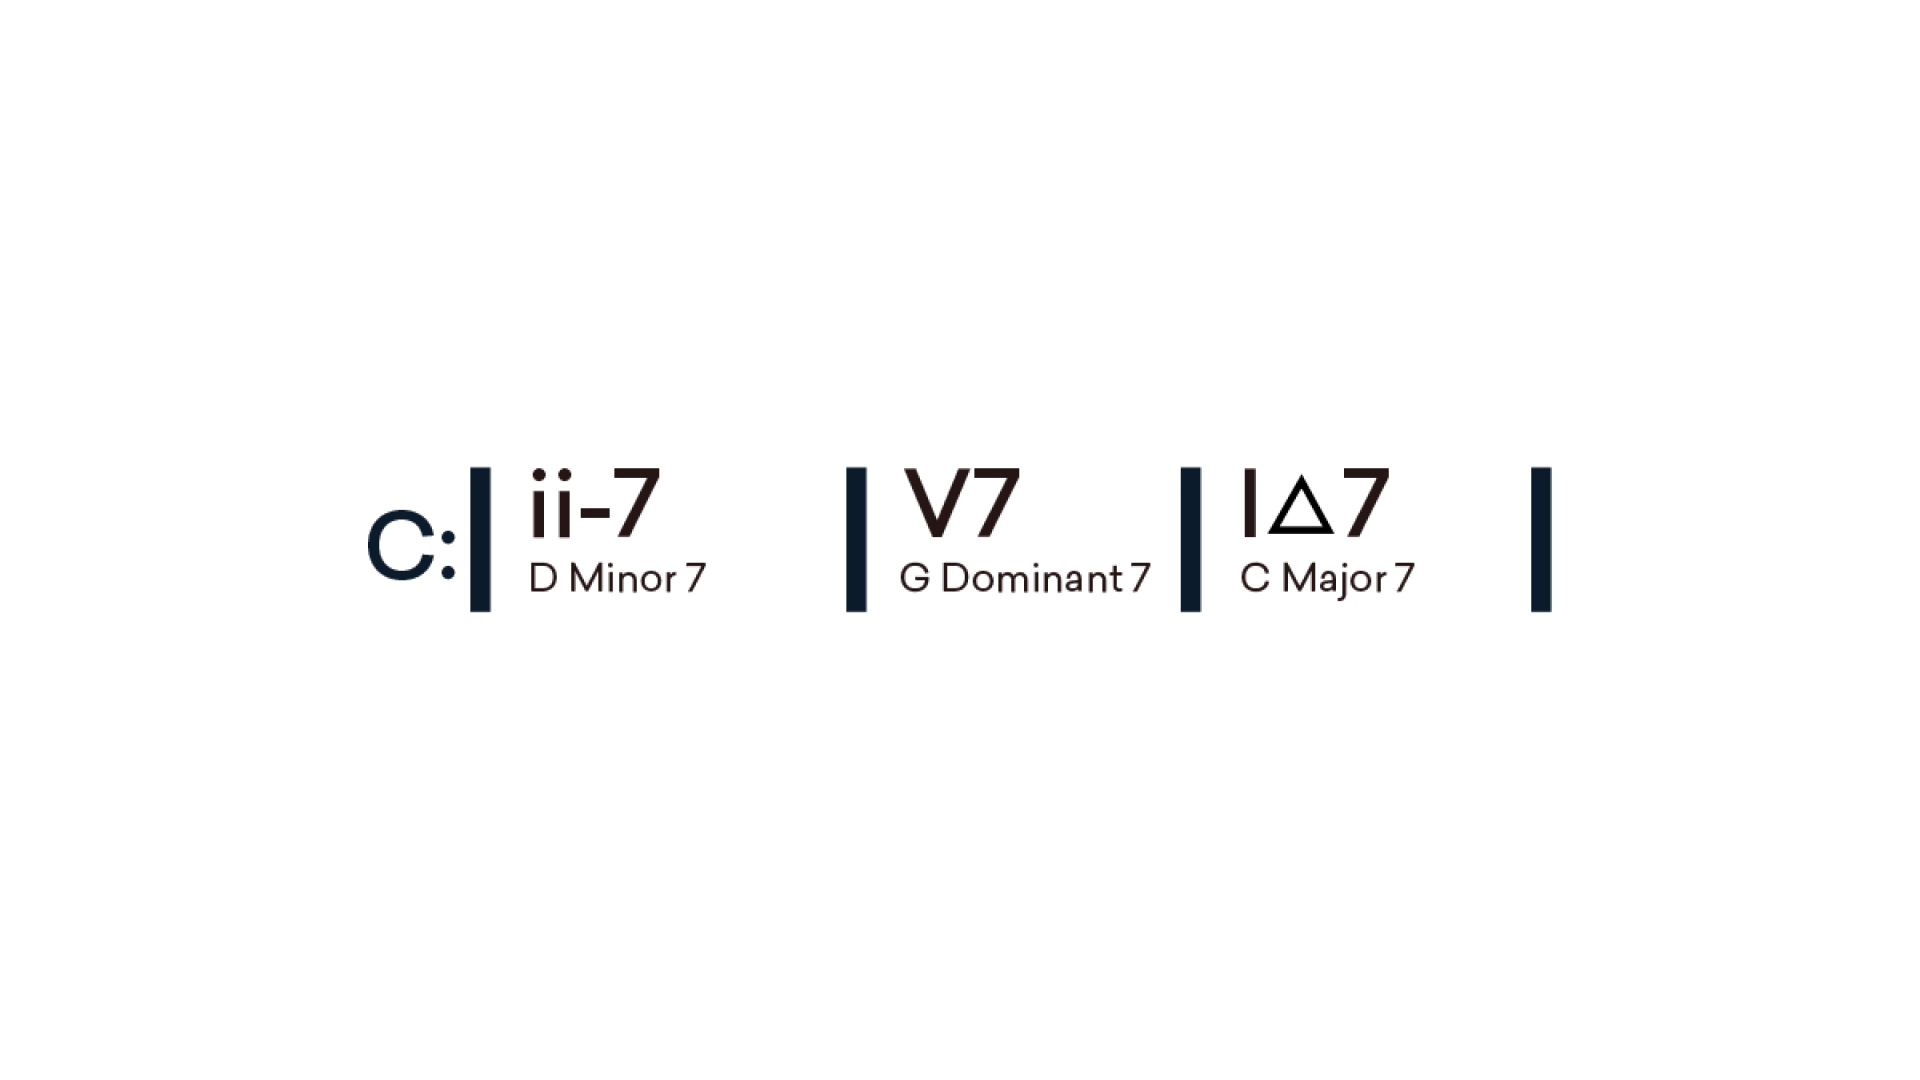 A 2-5-1 chord progression in C Major.